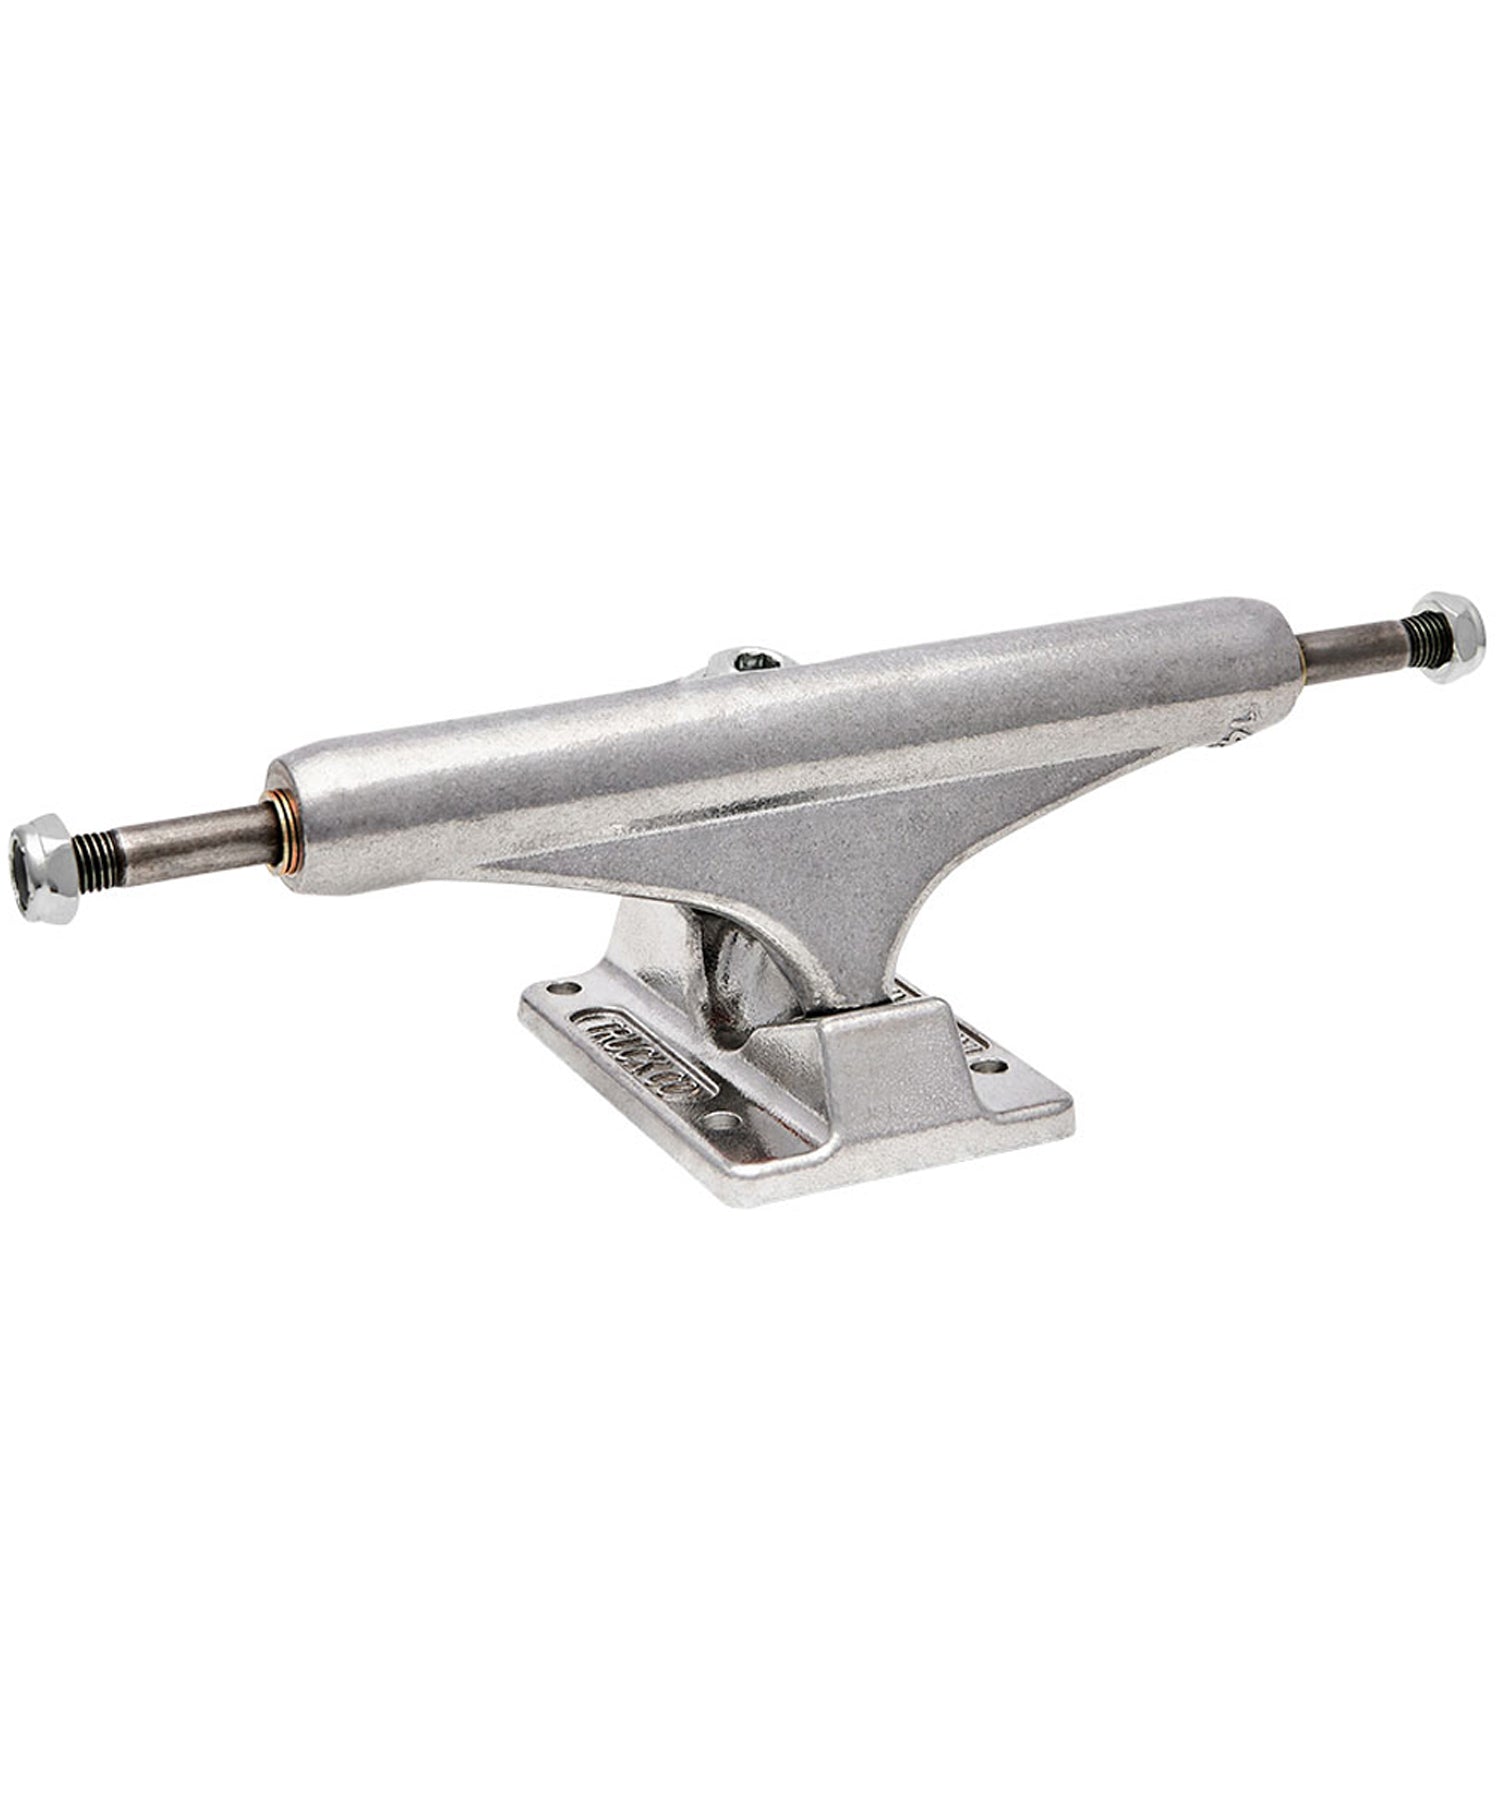 independent-mid-polished-149mm-mm-ejes de calidad-para skate-hanger y placa base de aluminio-duraderos-independent-marca reputada en ejes.